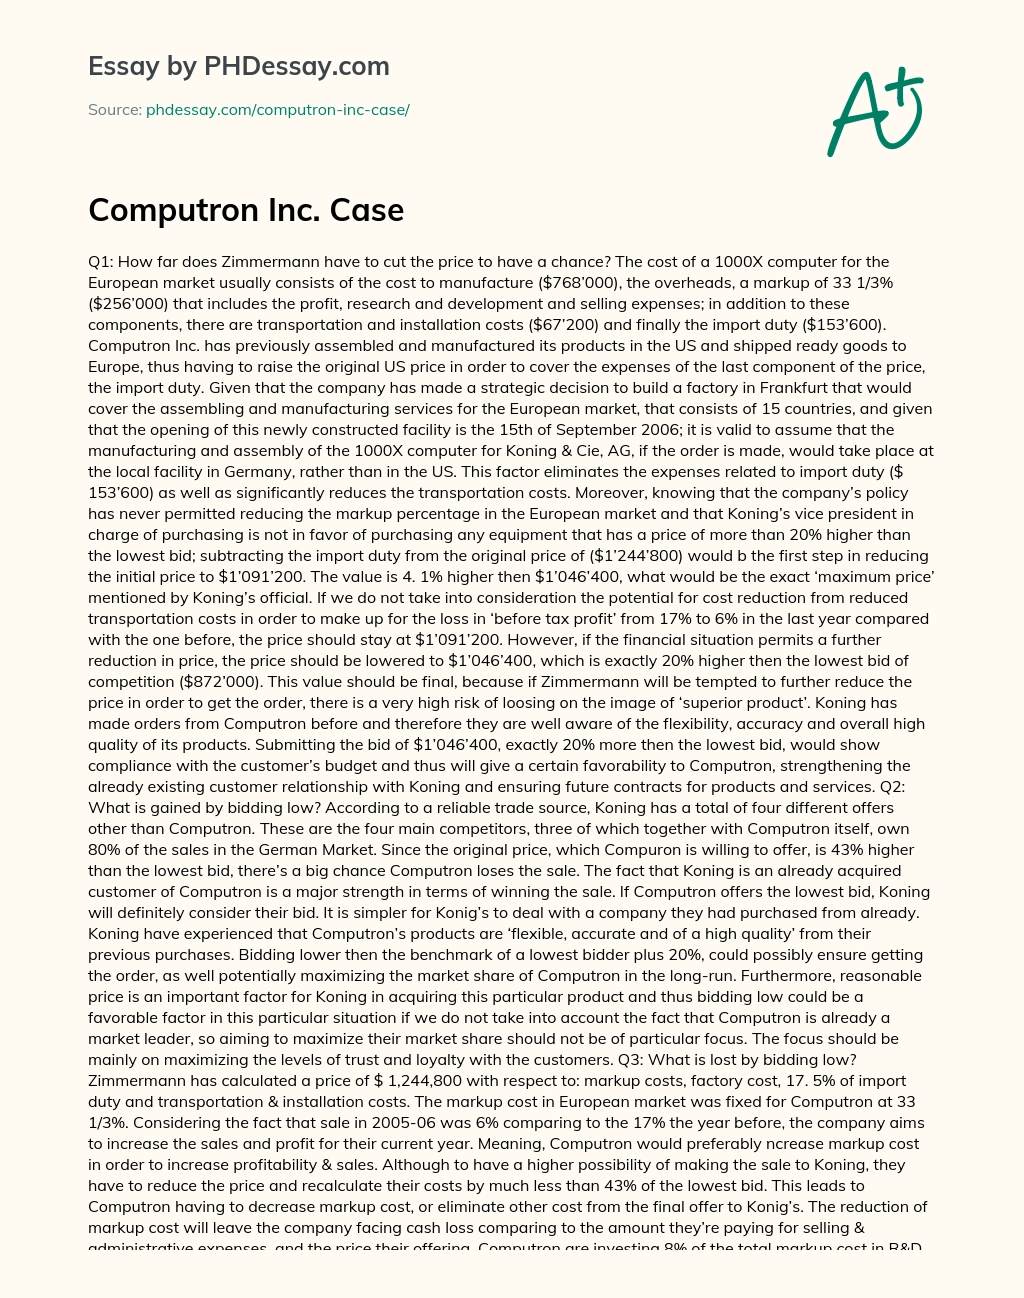 Computron Inc. Case essay